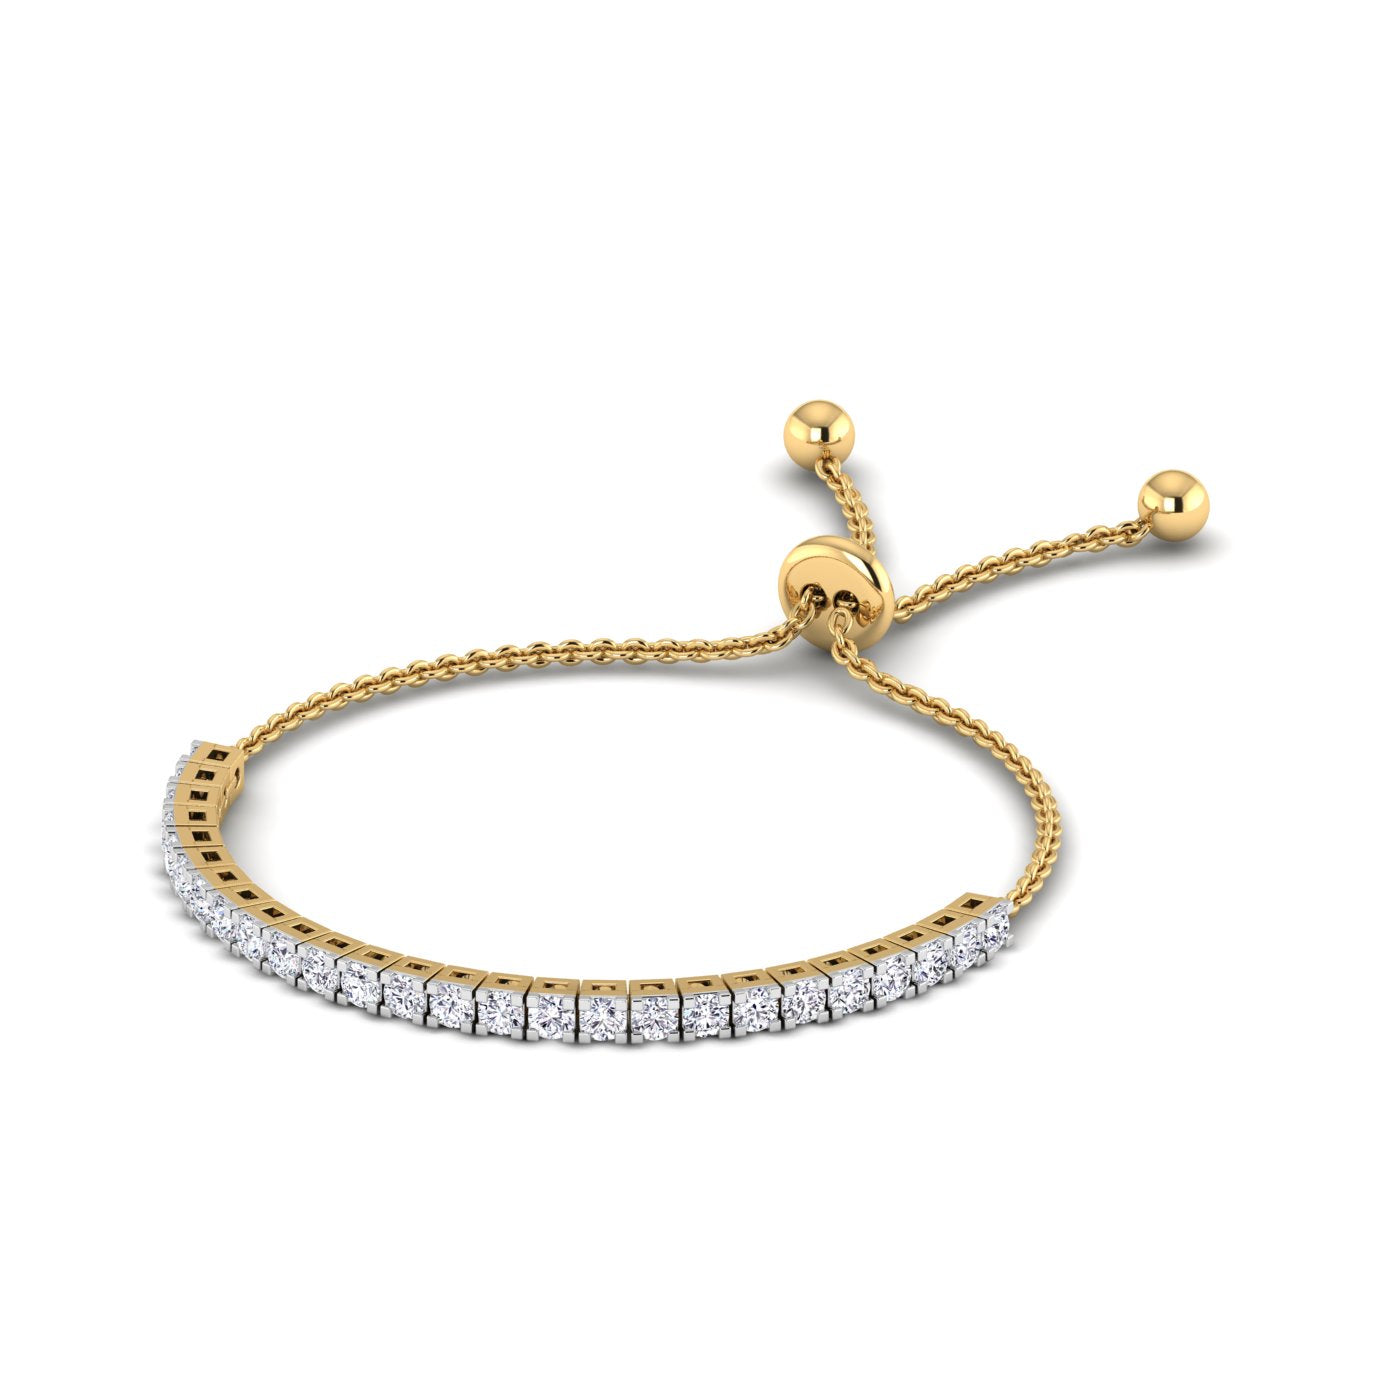 Archway Diamond Bracelet